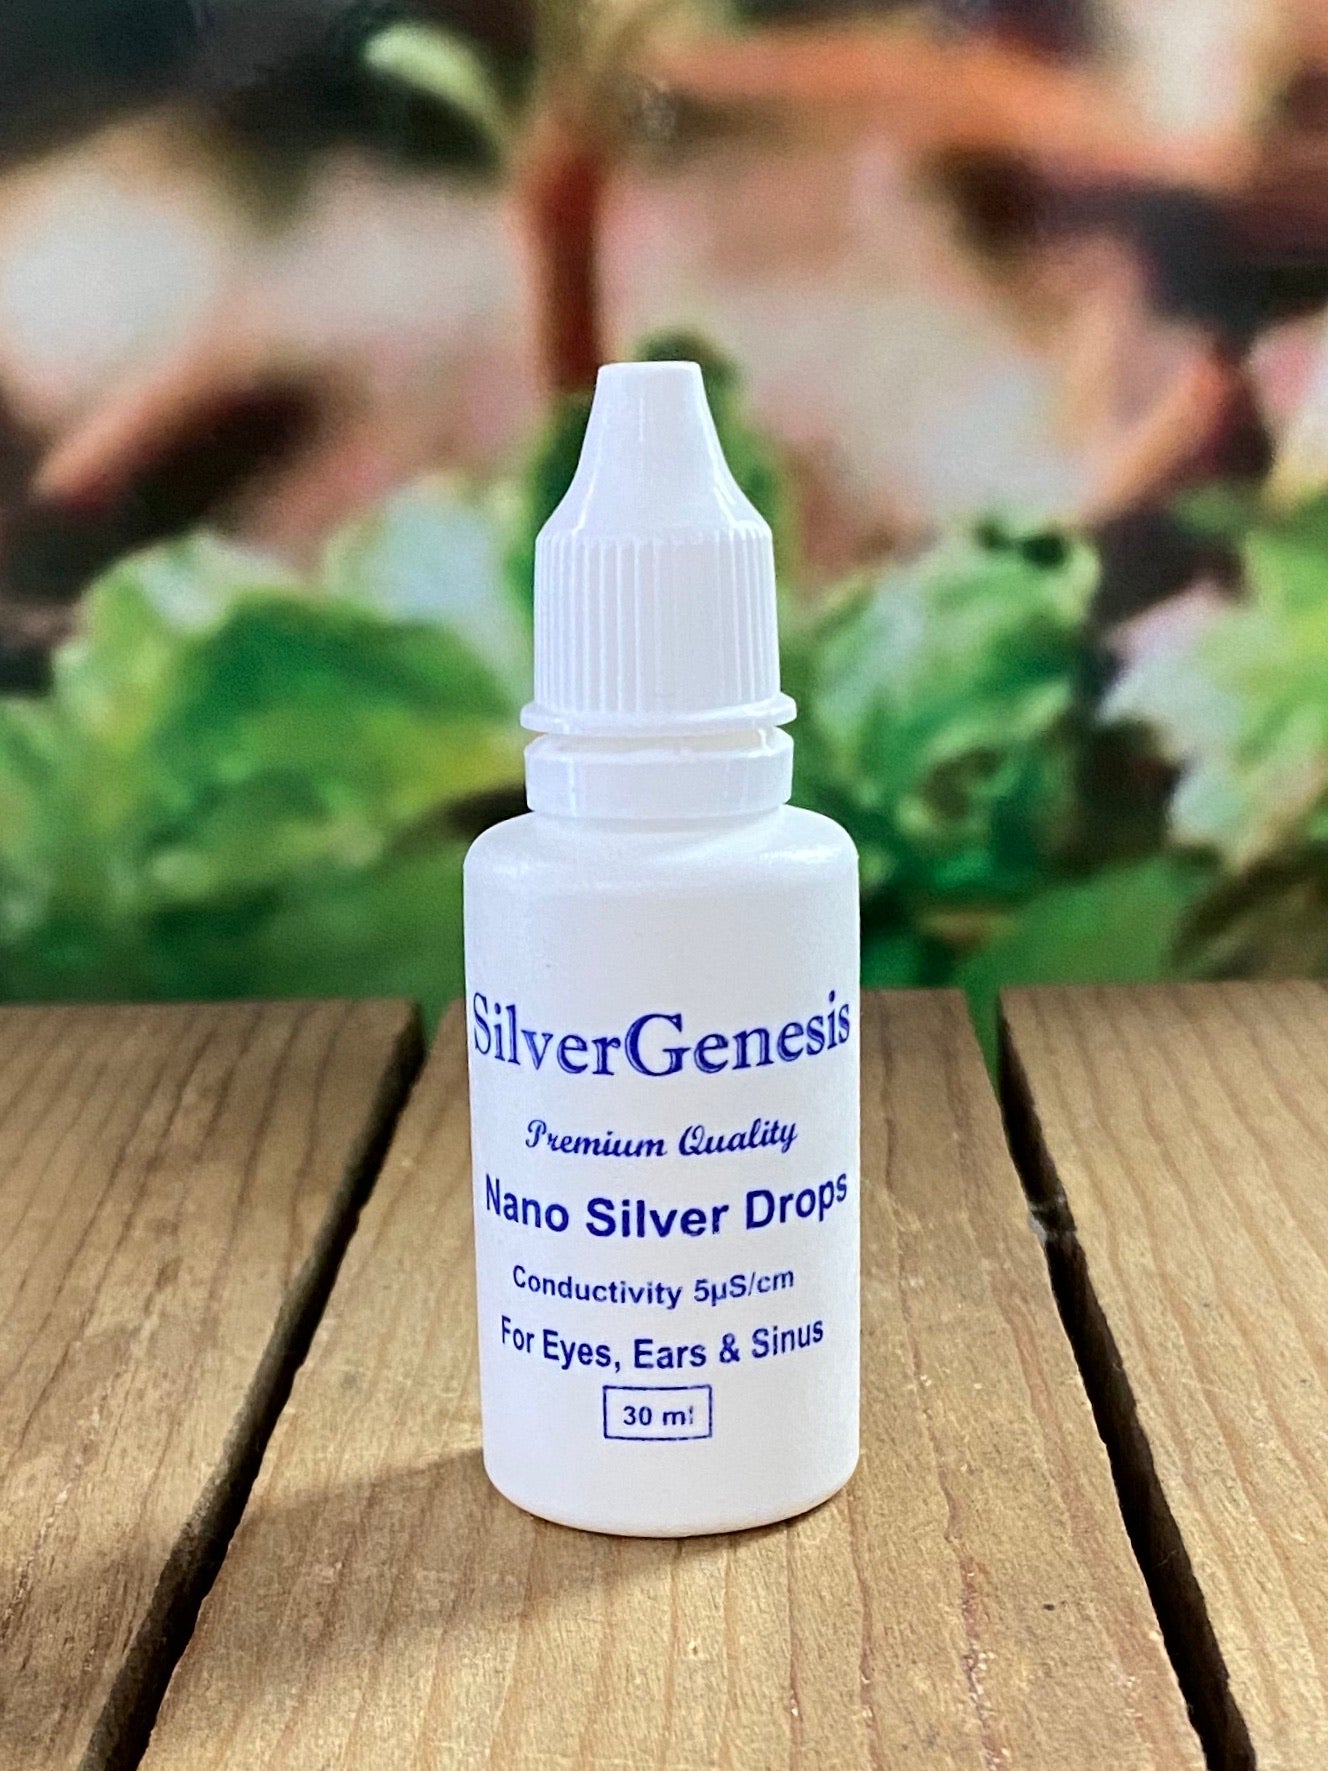 SilverGenesis 30 ml drops